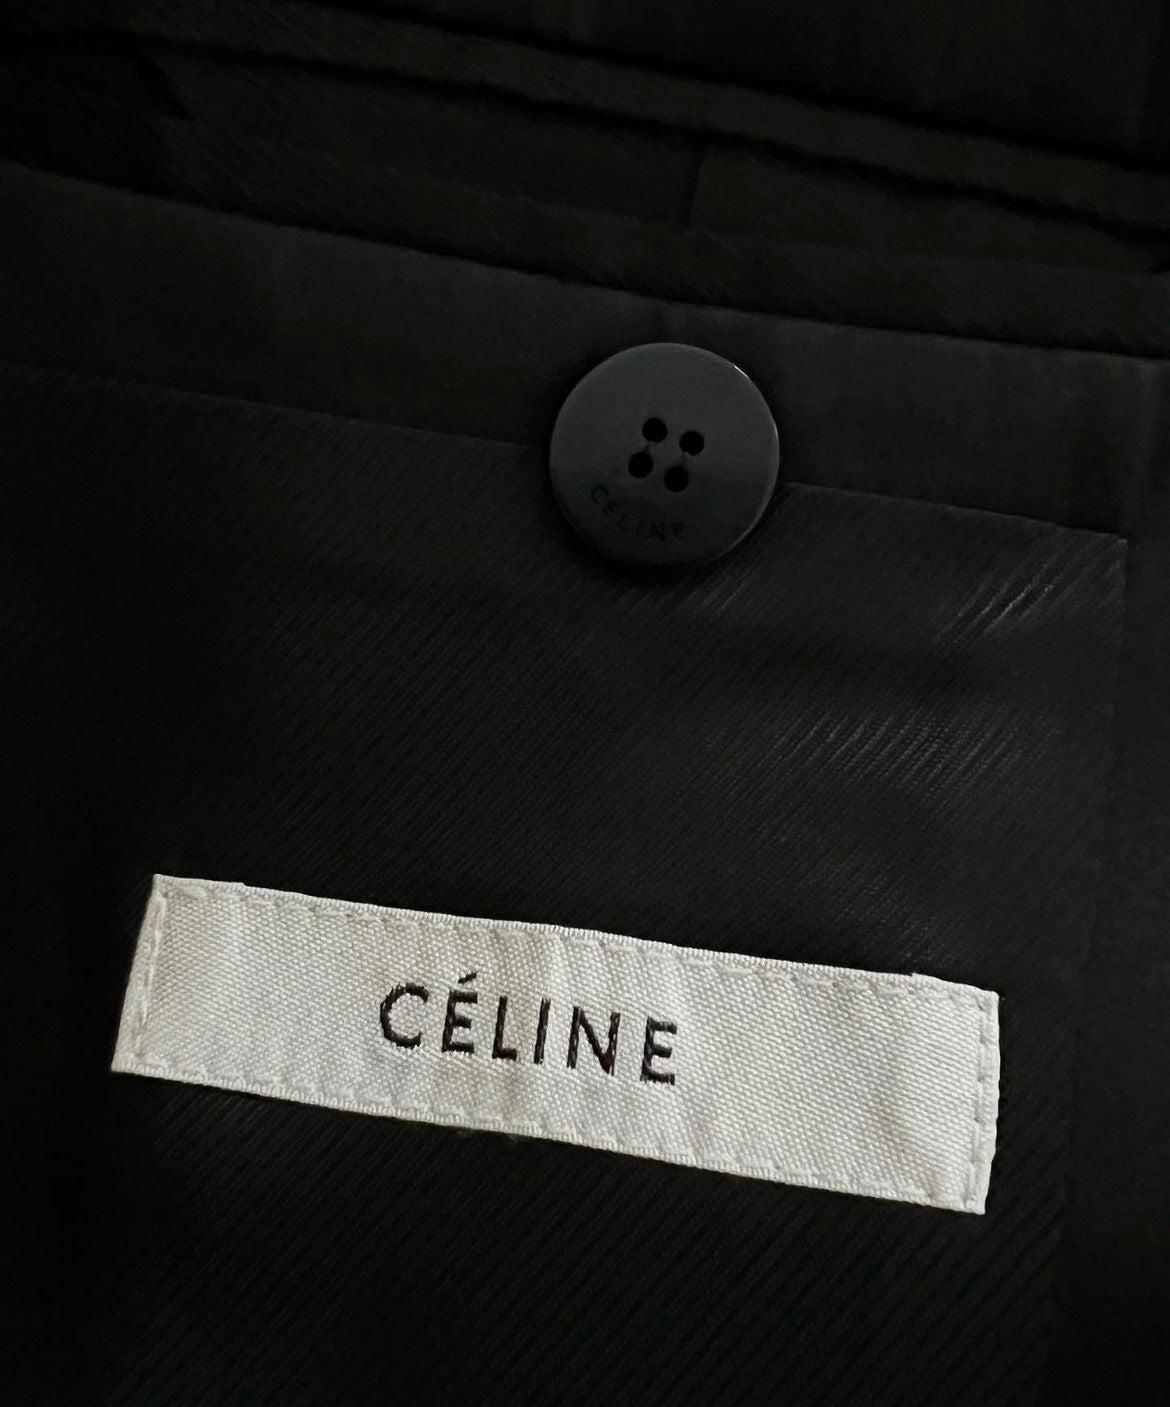 Céline Clothing